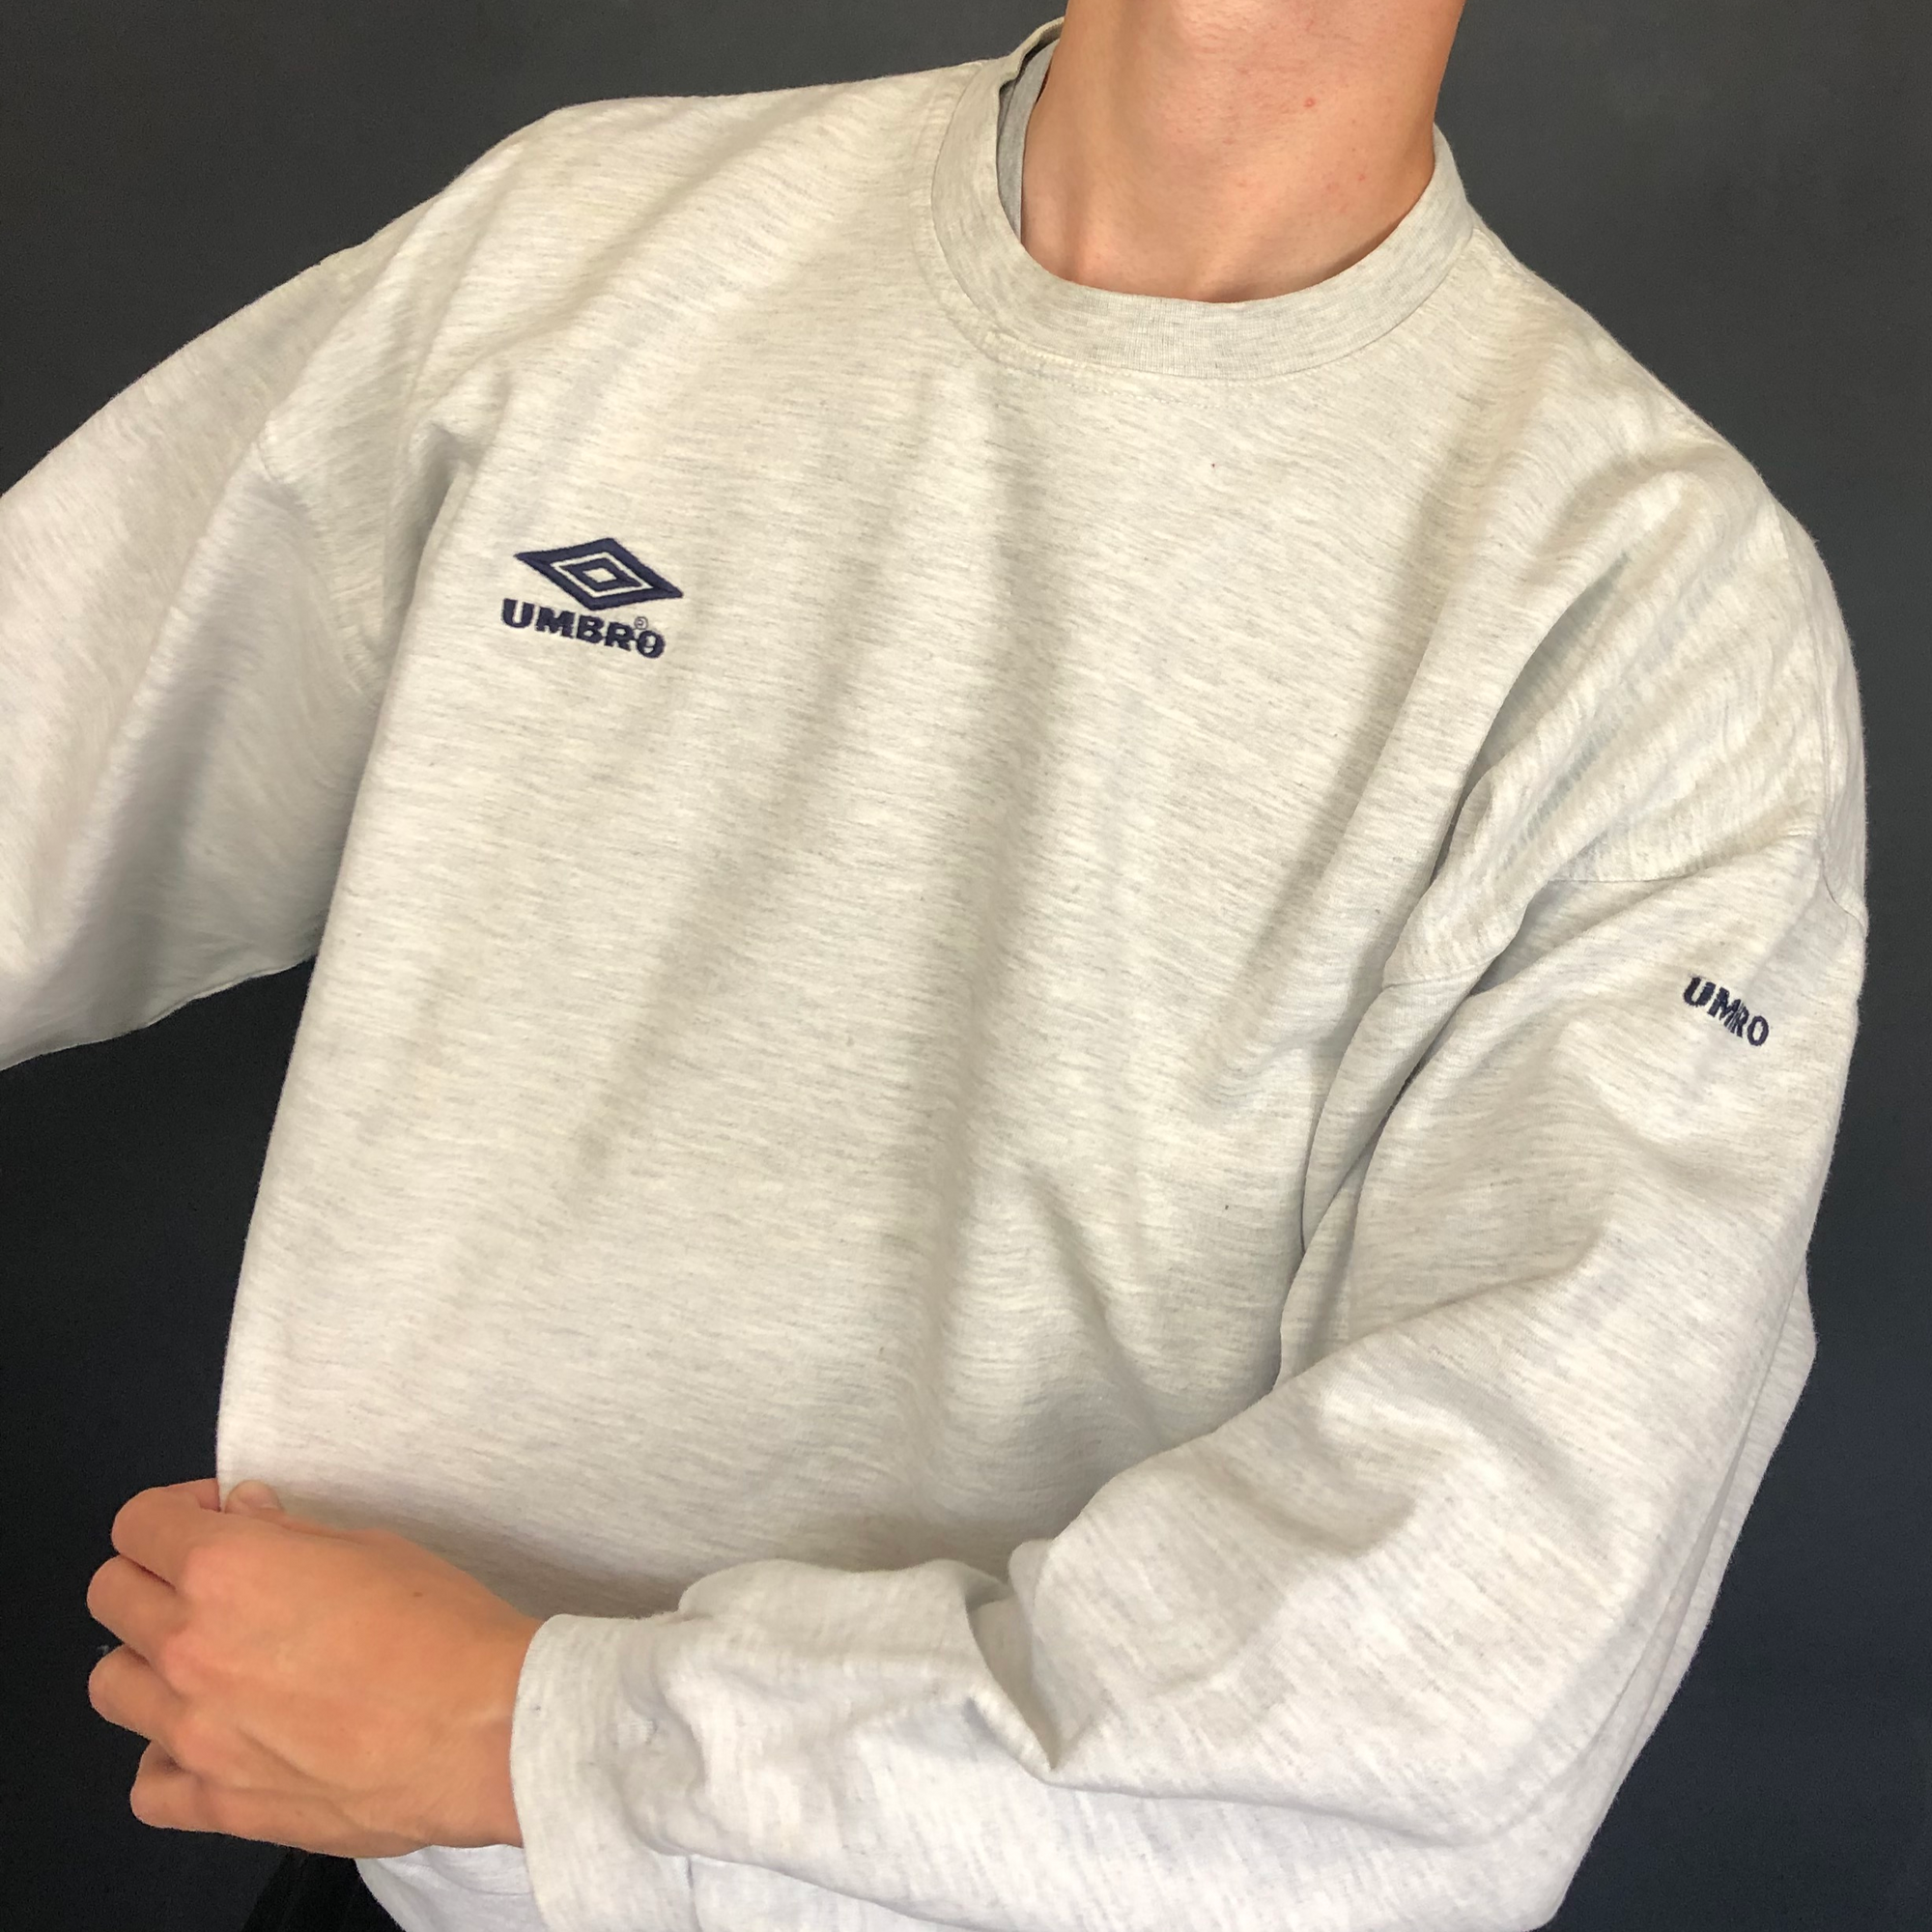 Vintage Umbro Sweatshirt in Grey - Large - Vintique Clothing